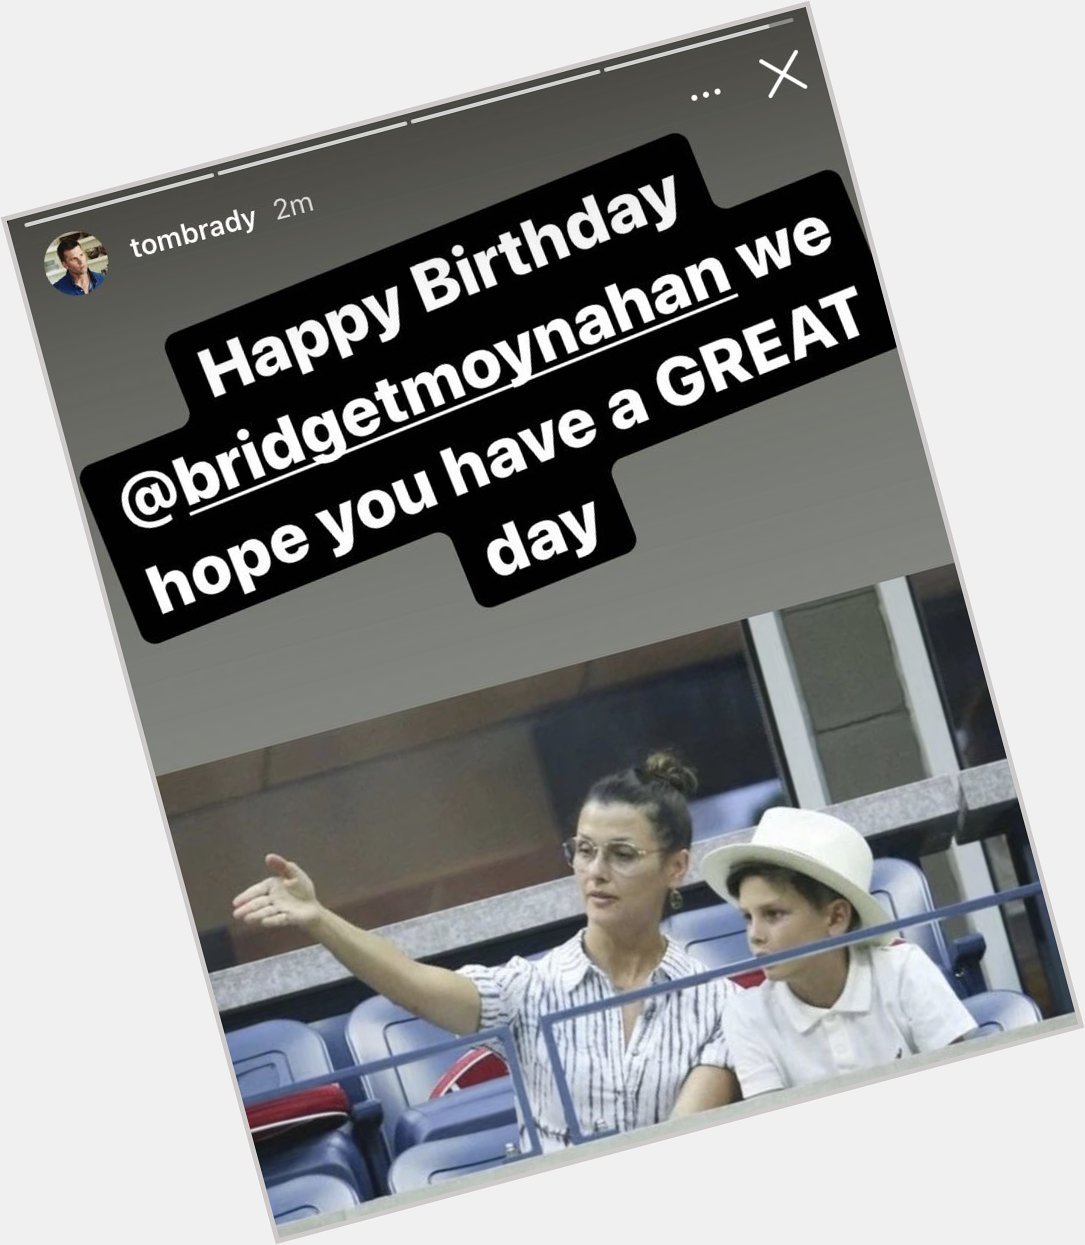 Tom Brady wishes Bridget Moynahan a happy birthday! 